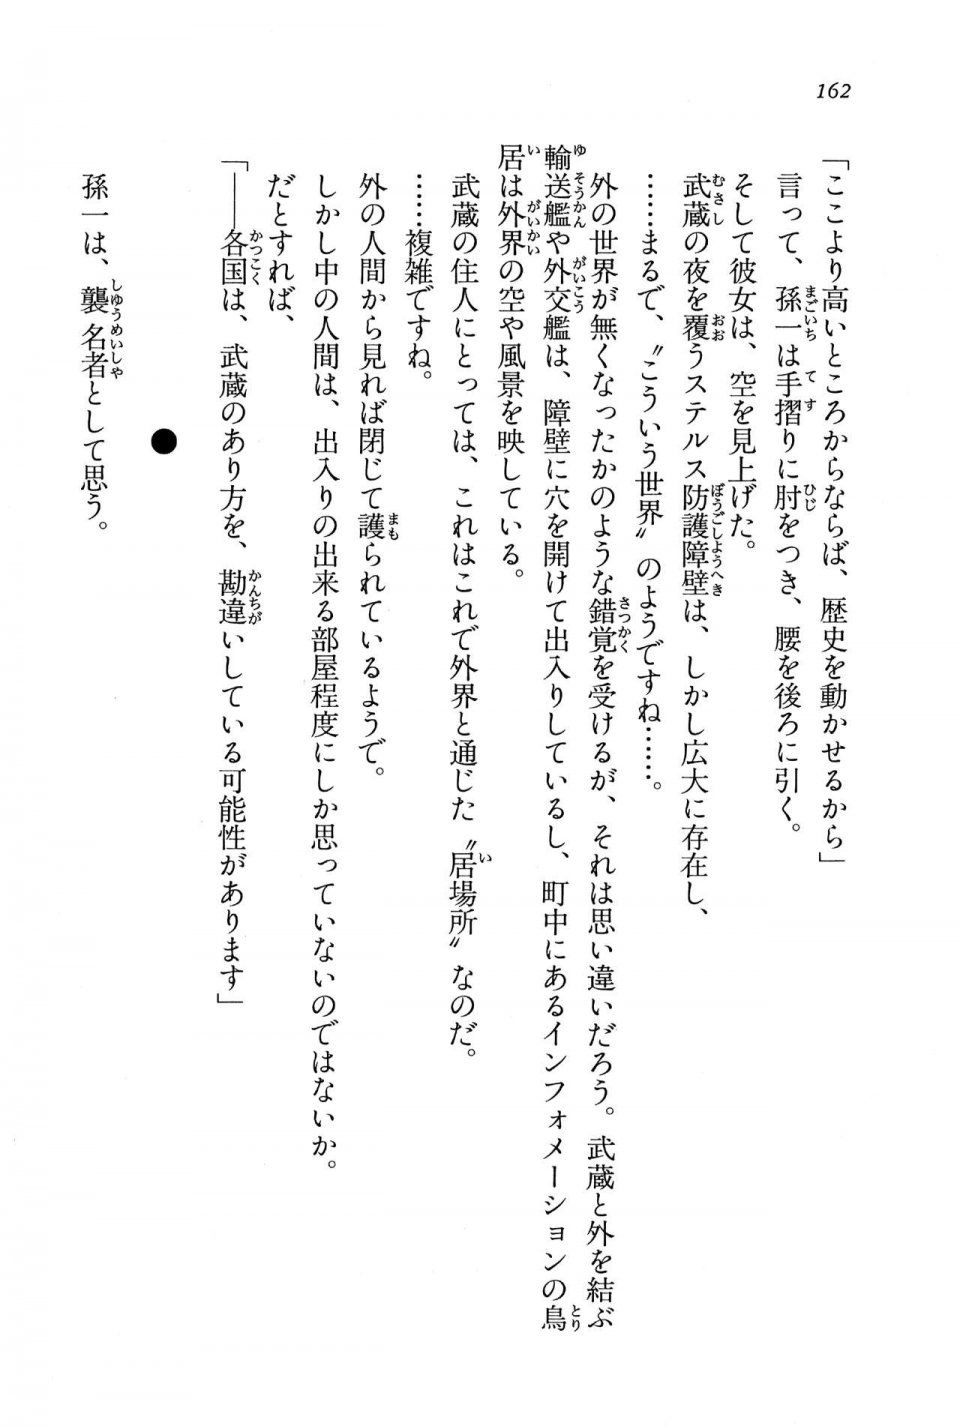 Kyoukai Senjou no Horizon BD Special Mininovel Vol 7(4A) - Photo #166